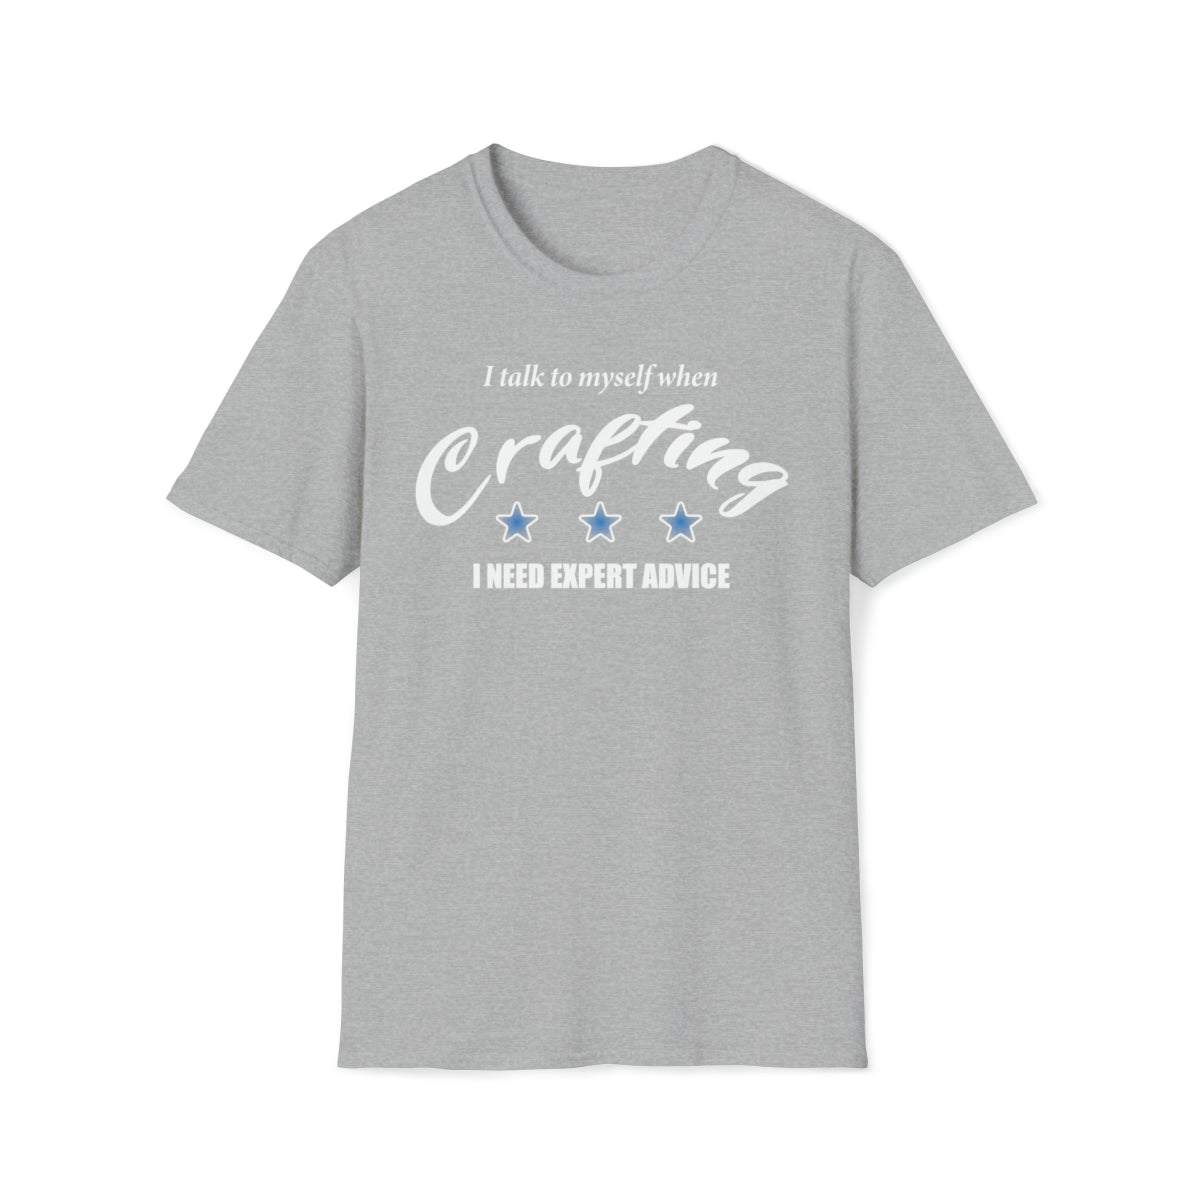 I talk to Myself When Crafting - Short Sleeve Unisex Soft Style T-Shirt